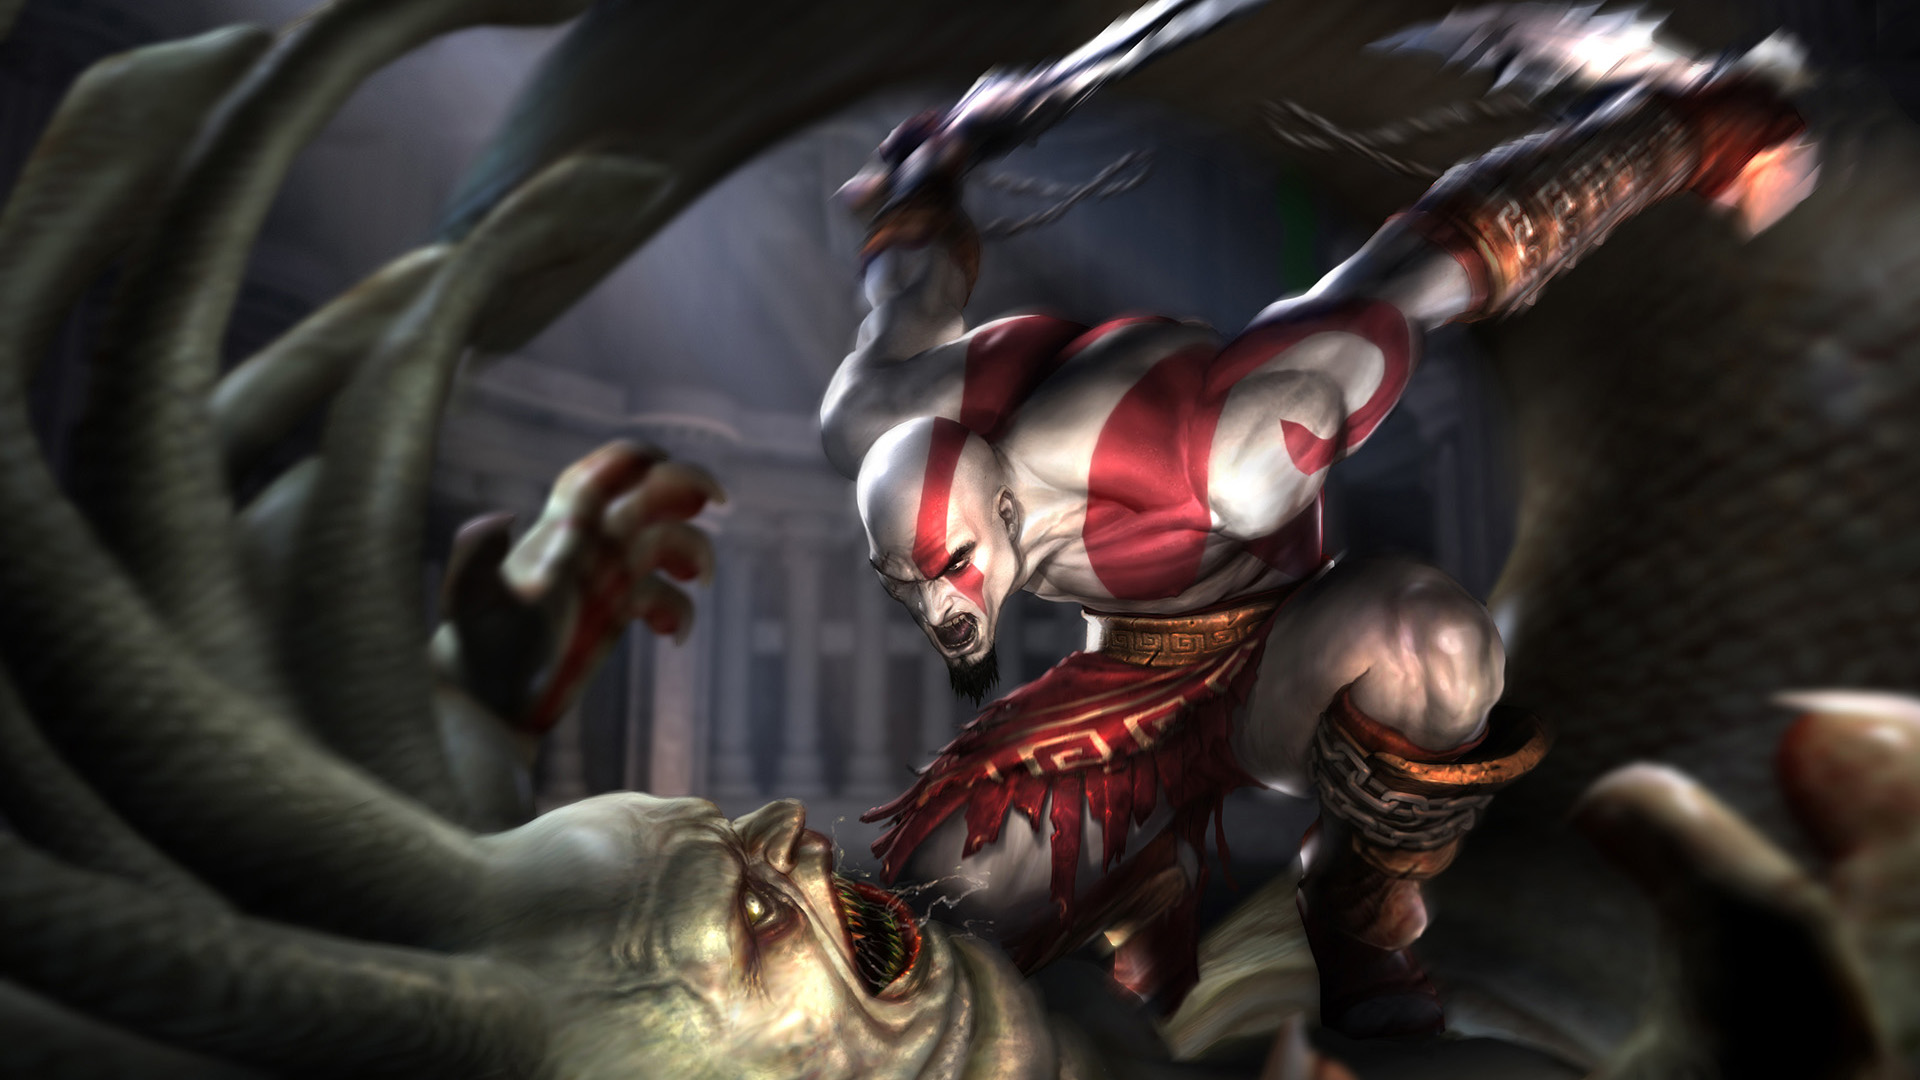 20 Kratos (God Of War) HD Wallpapers | Backgrounds - Wallpaper Abyss